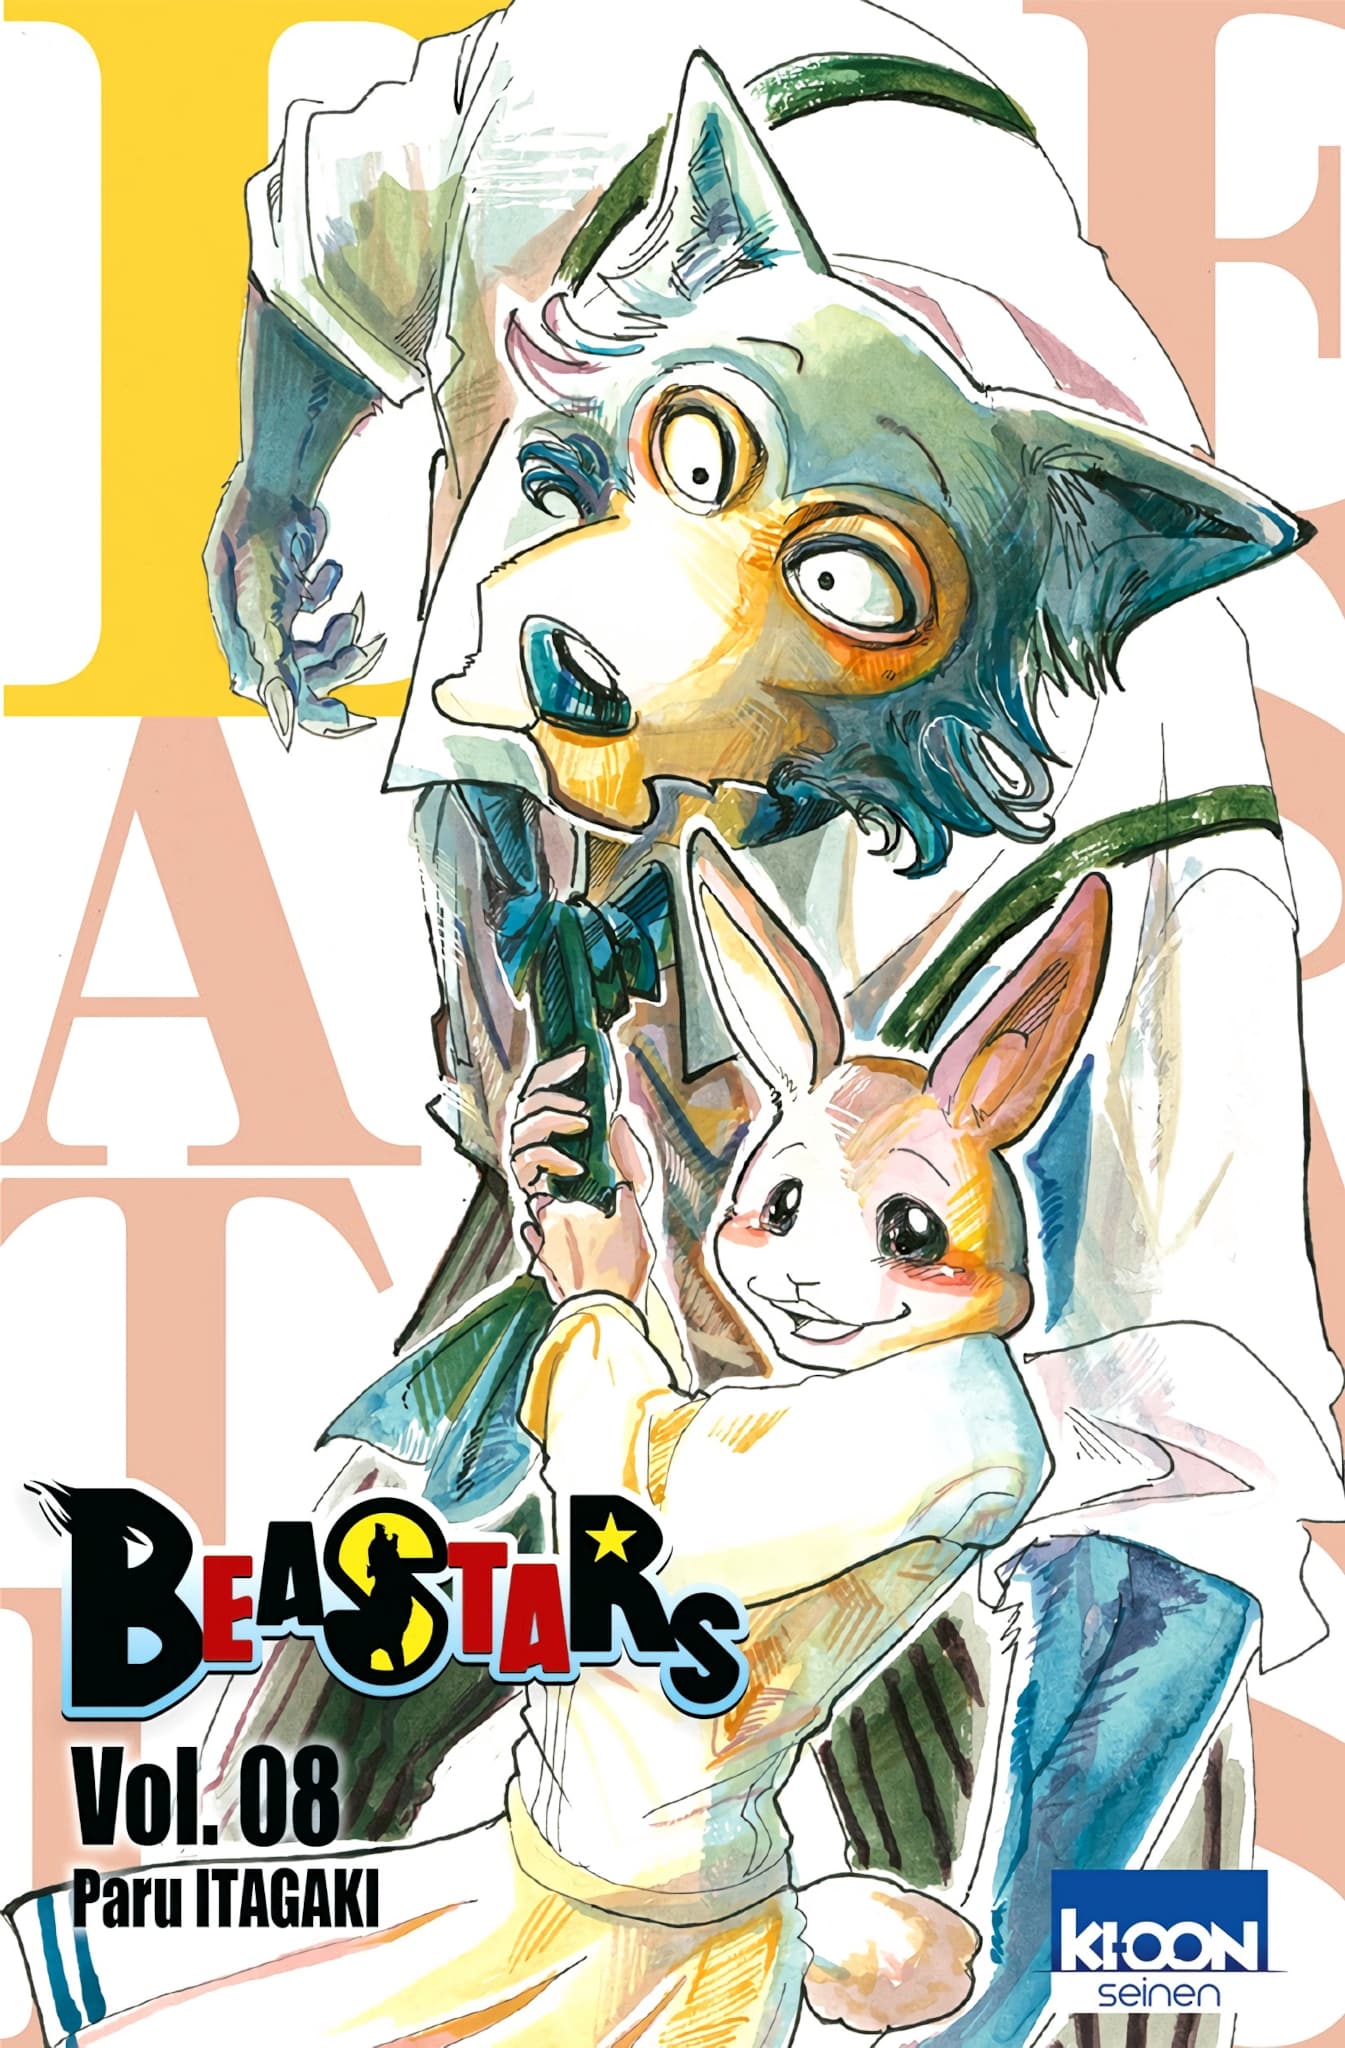 Tome 8 du manga Beastars